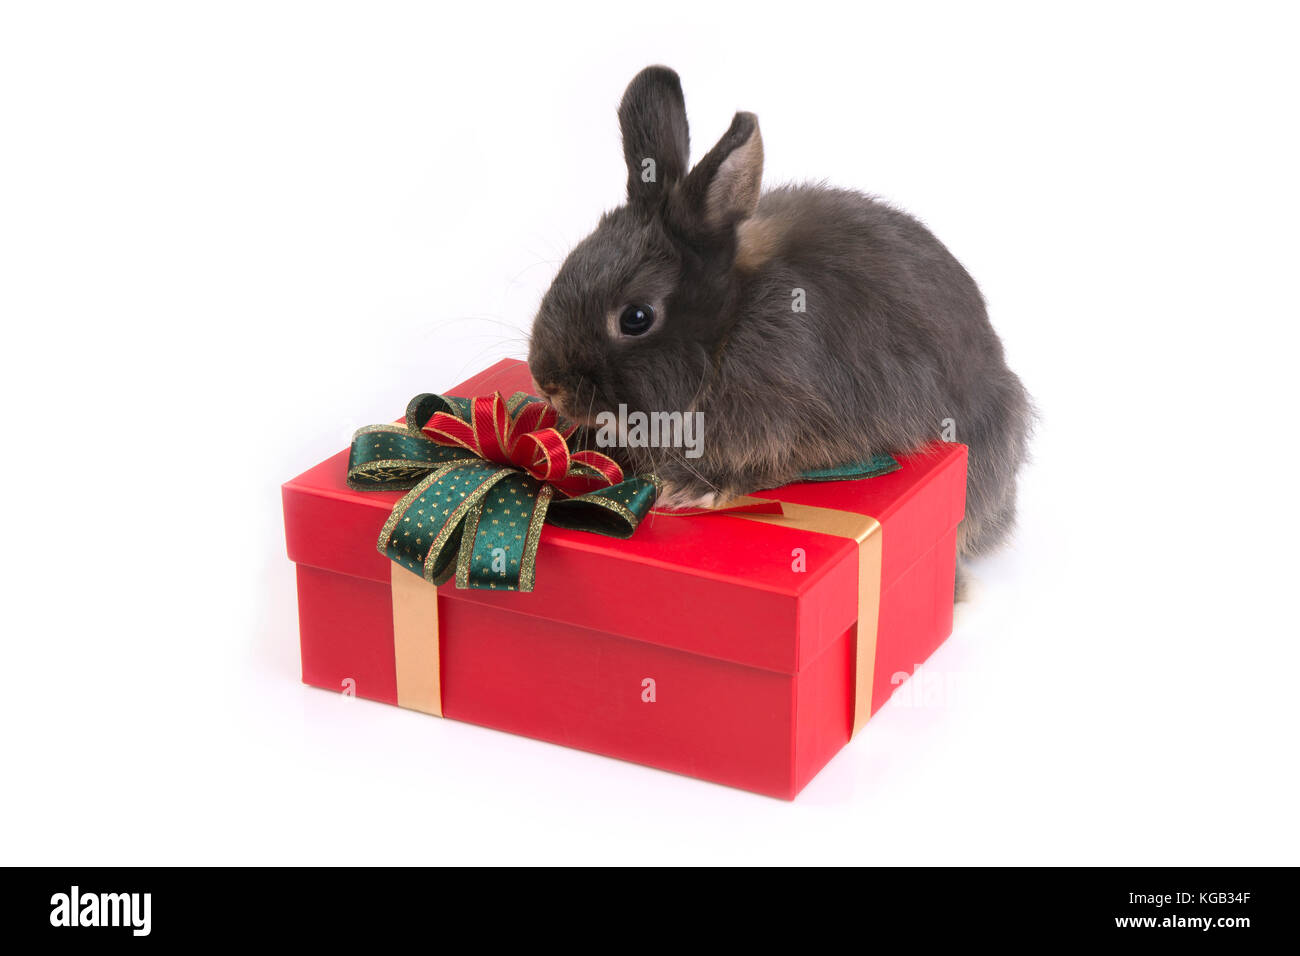 Cute gray netherland dwarf rabbit on red gift box on white background. Stock Photo